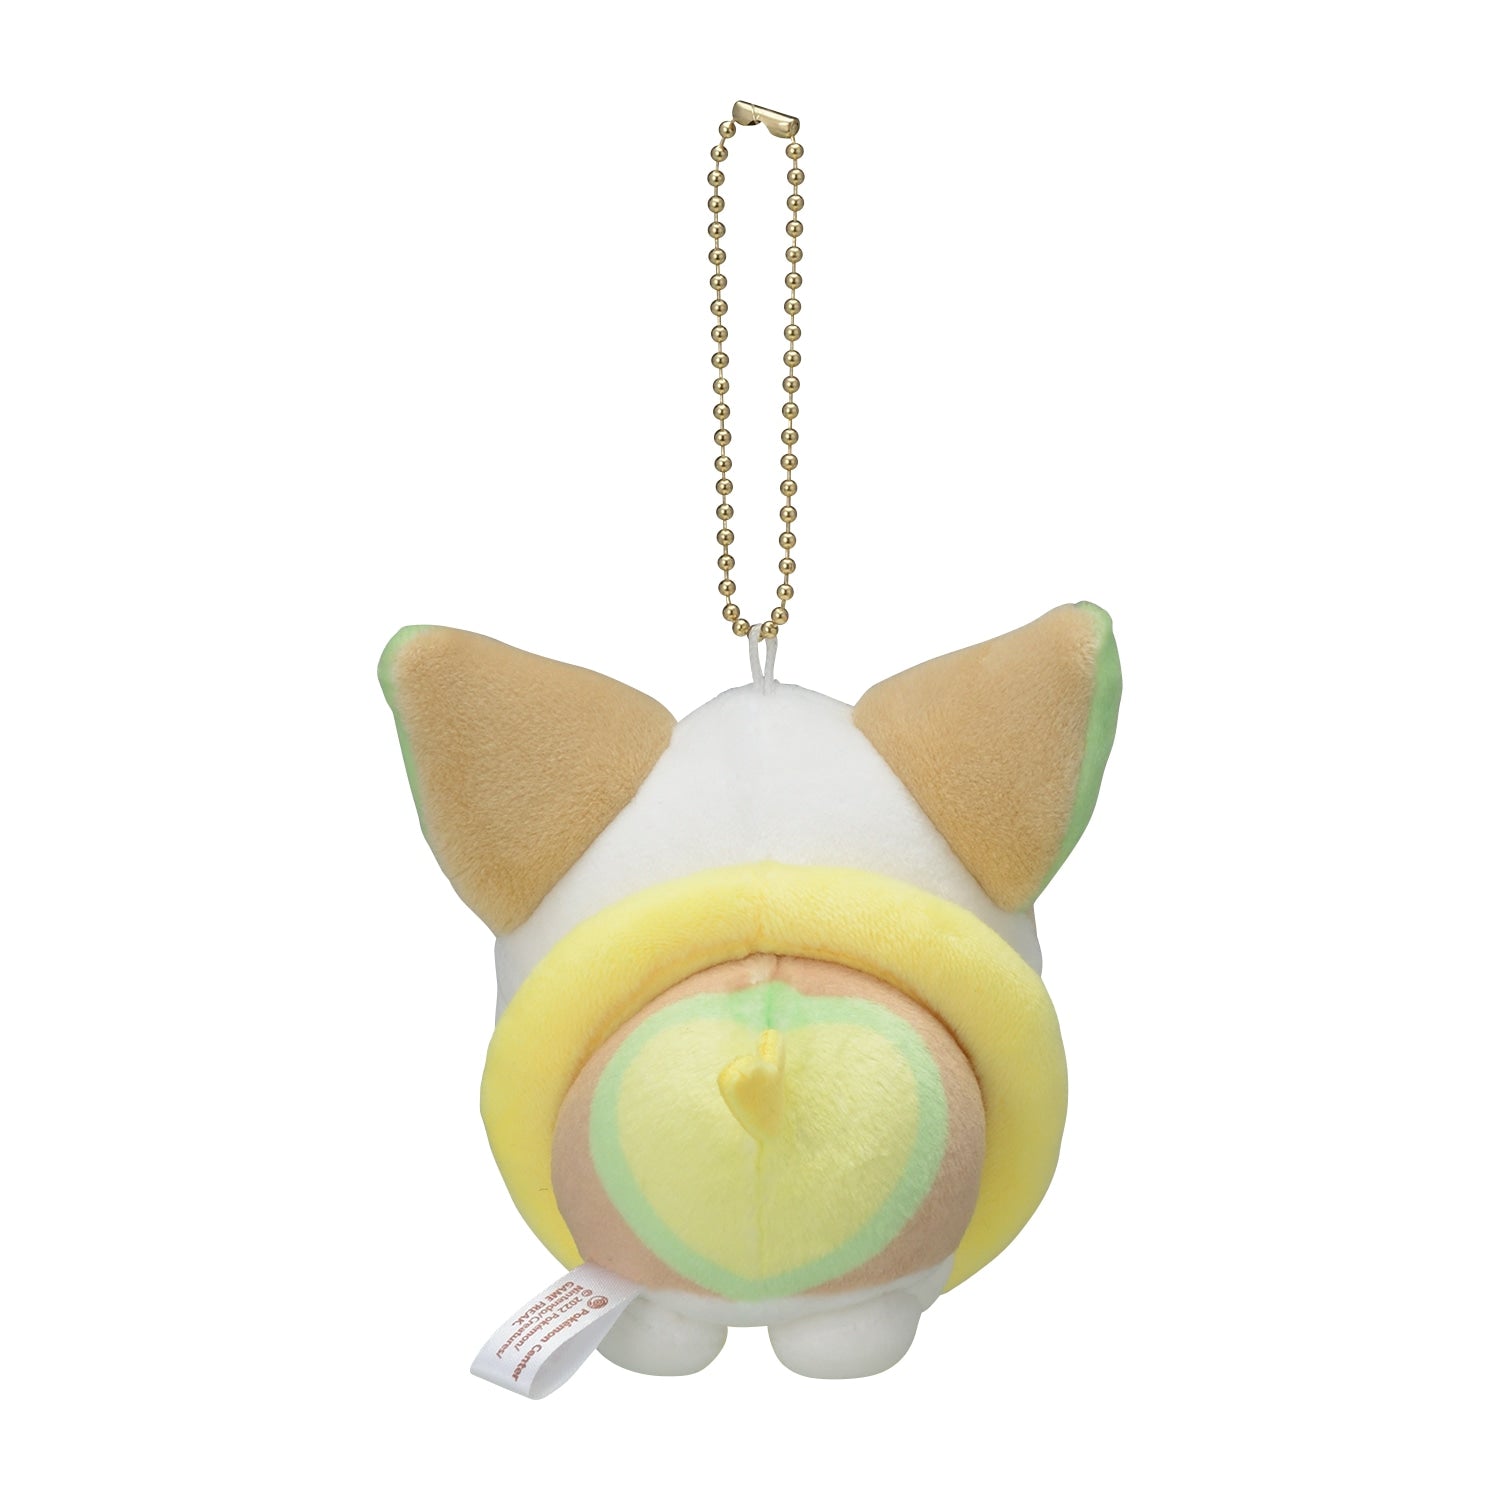 MUVEIL Gramma Plush Mascot Doll Key Chain Lily Japanese item F/S  w/tracking